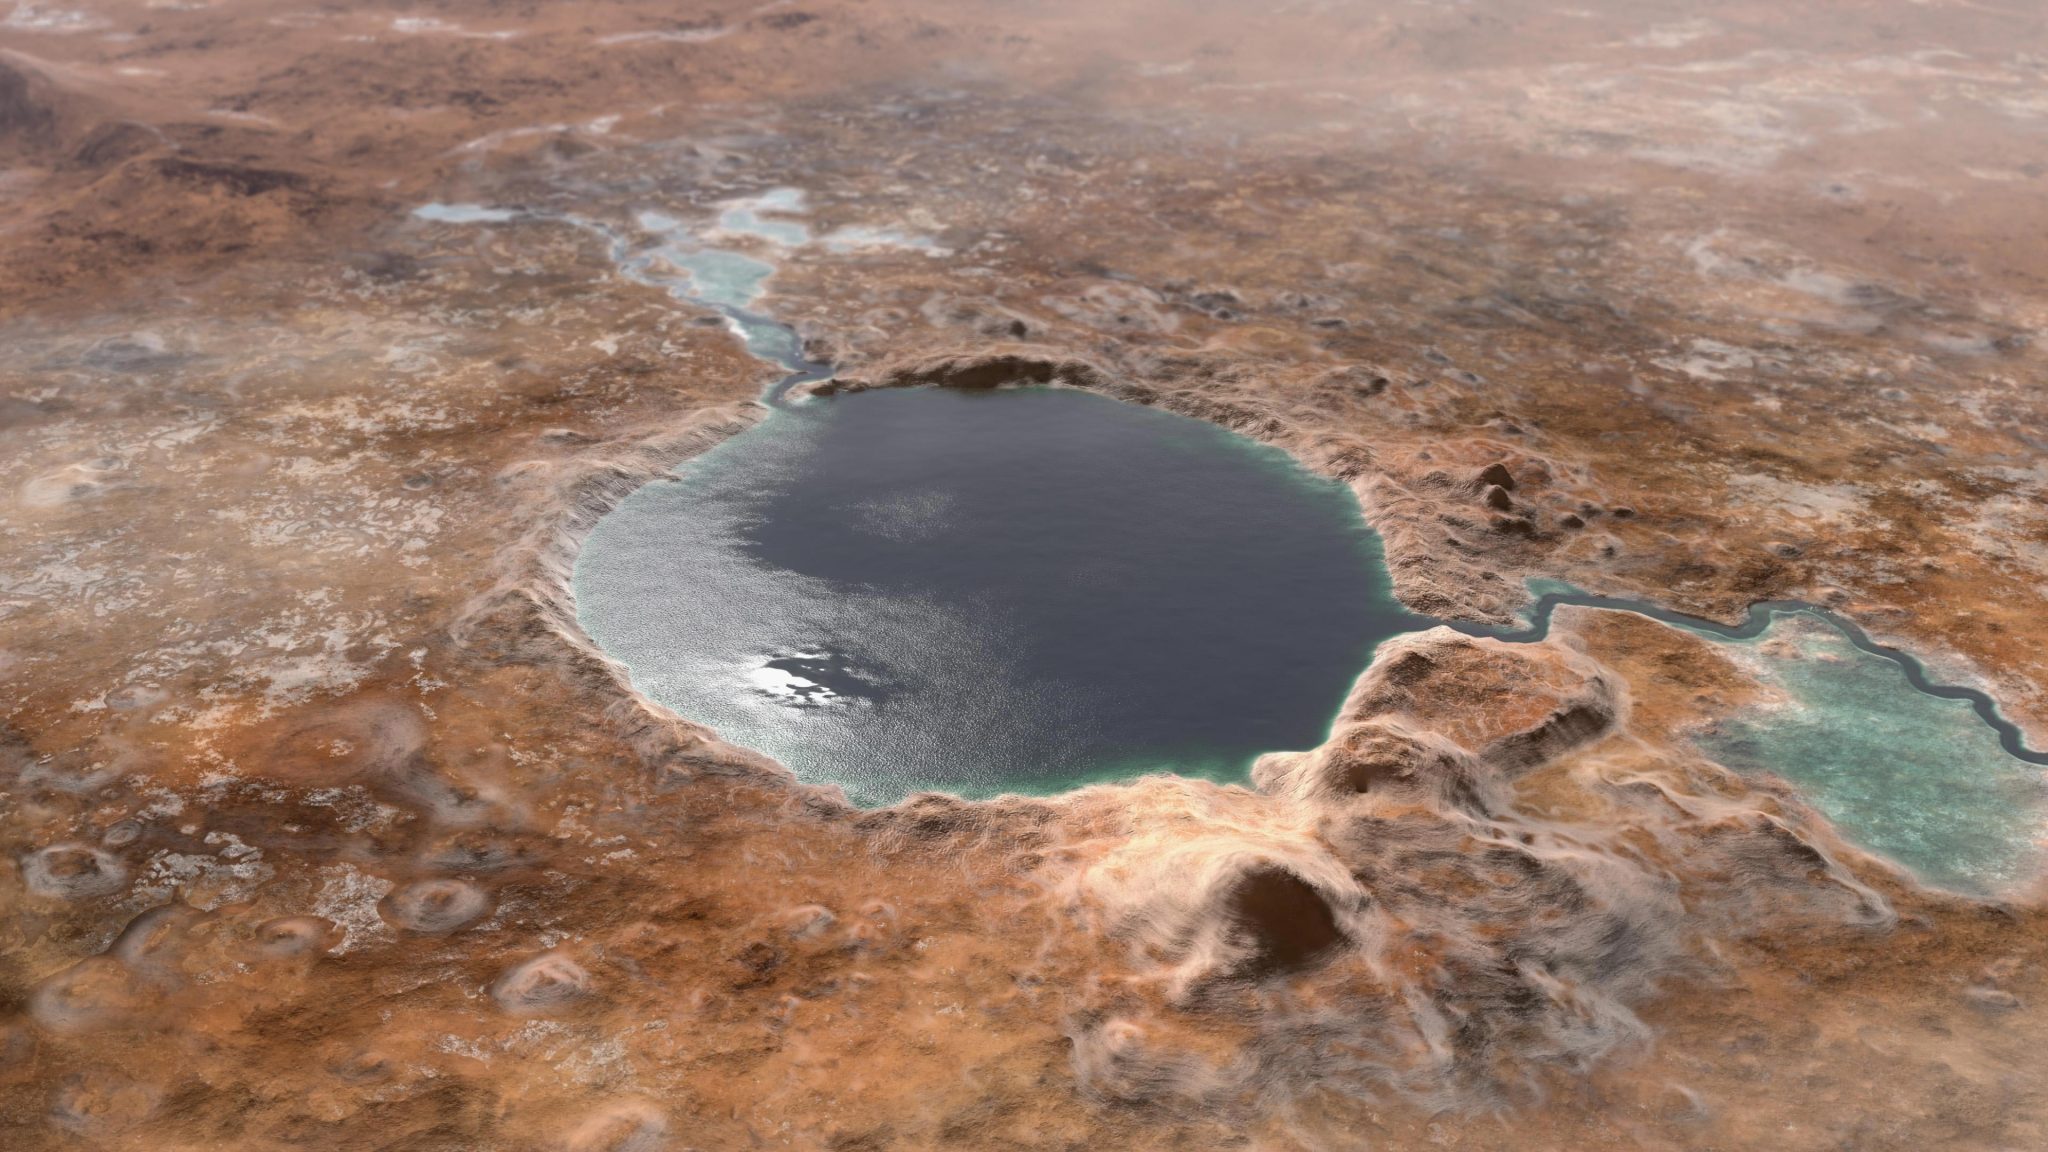 mars-jezero-crater-lake-2048x1152-1